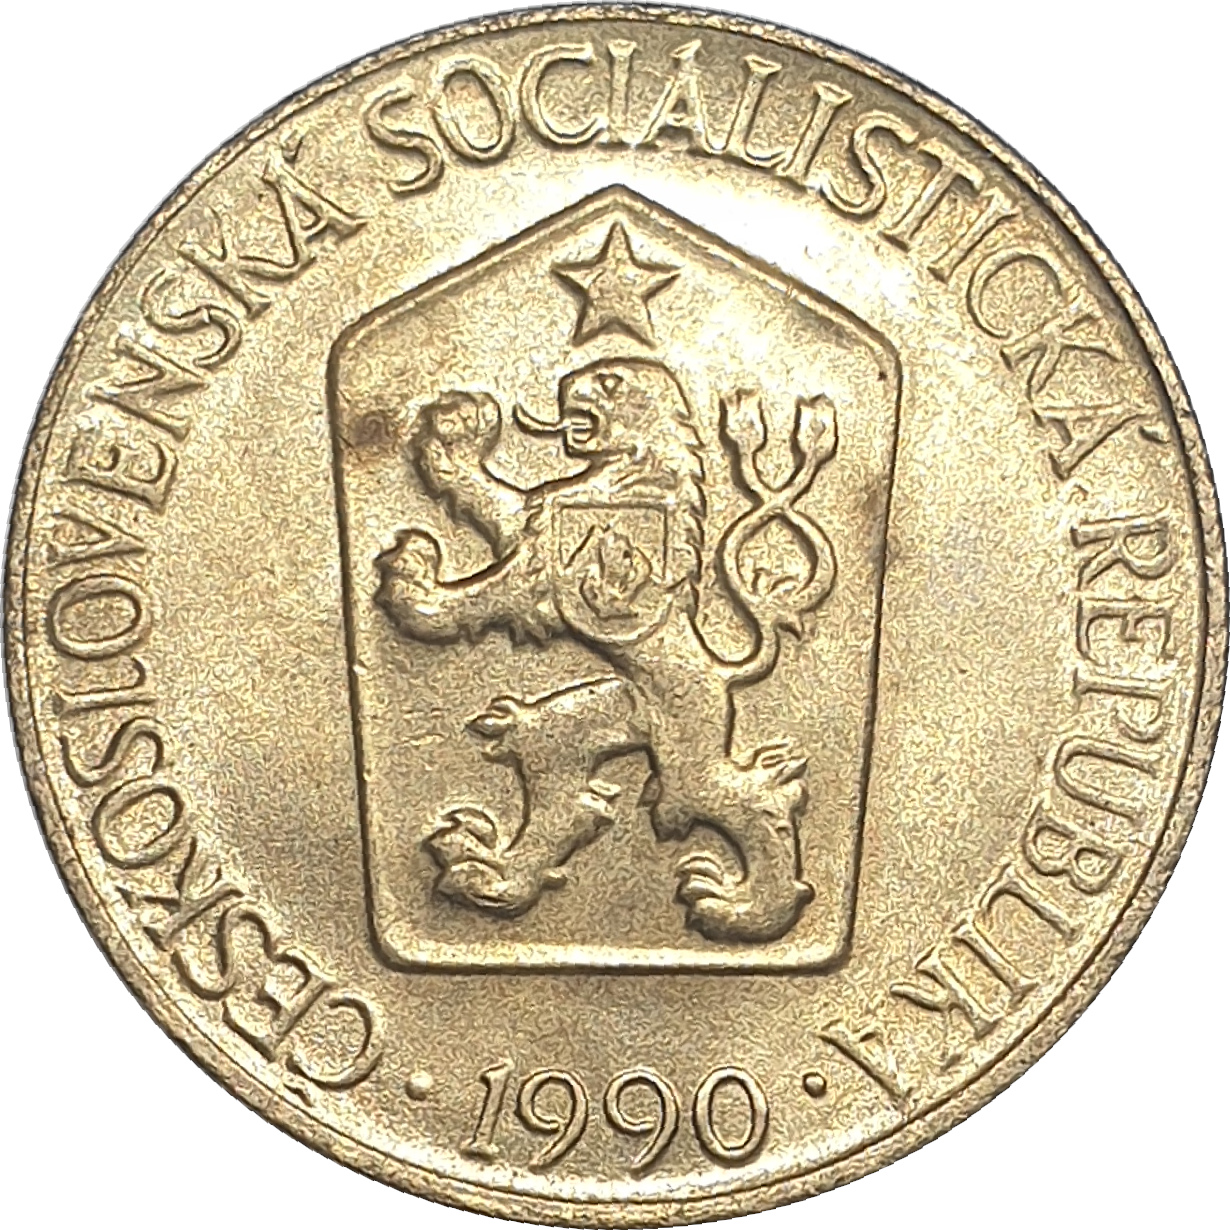 1 koruna - Heraldic Lion